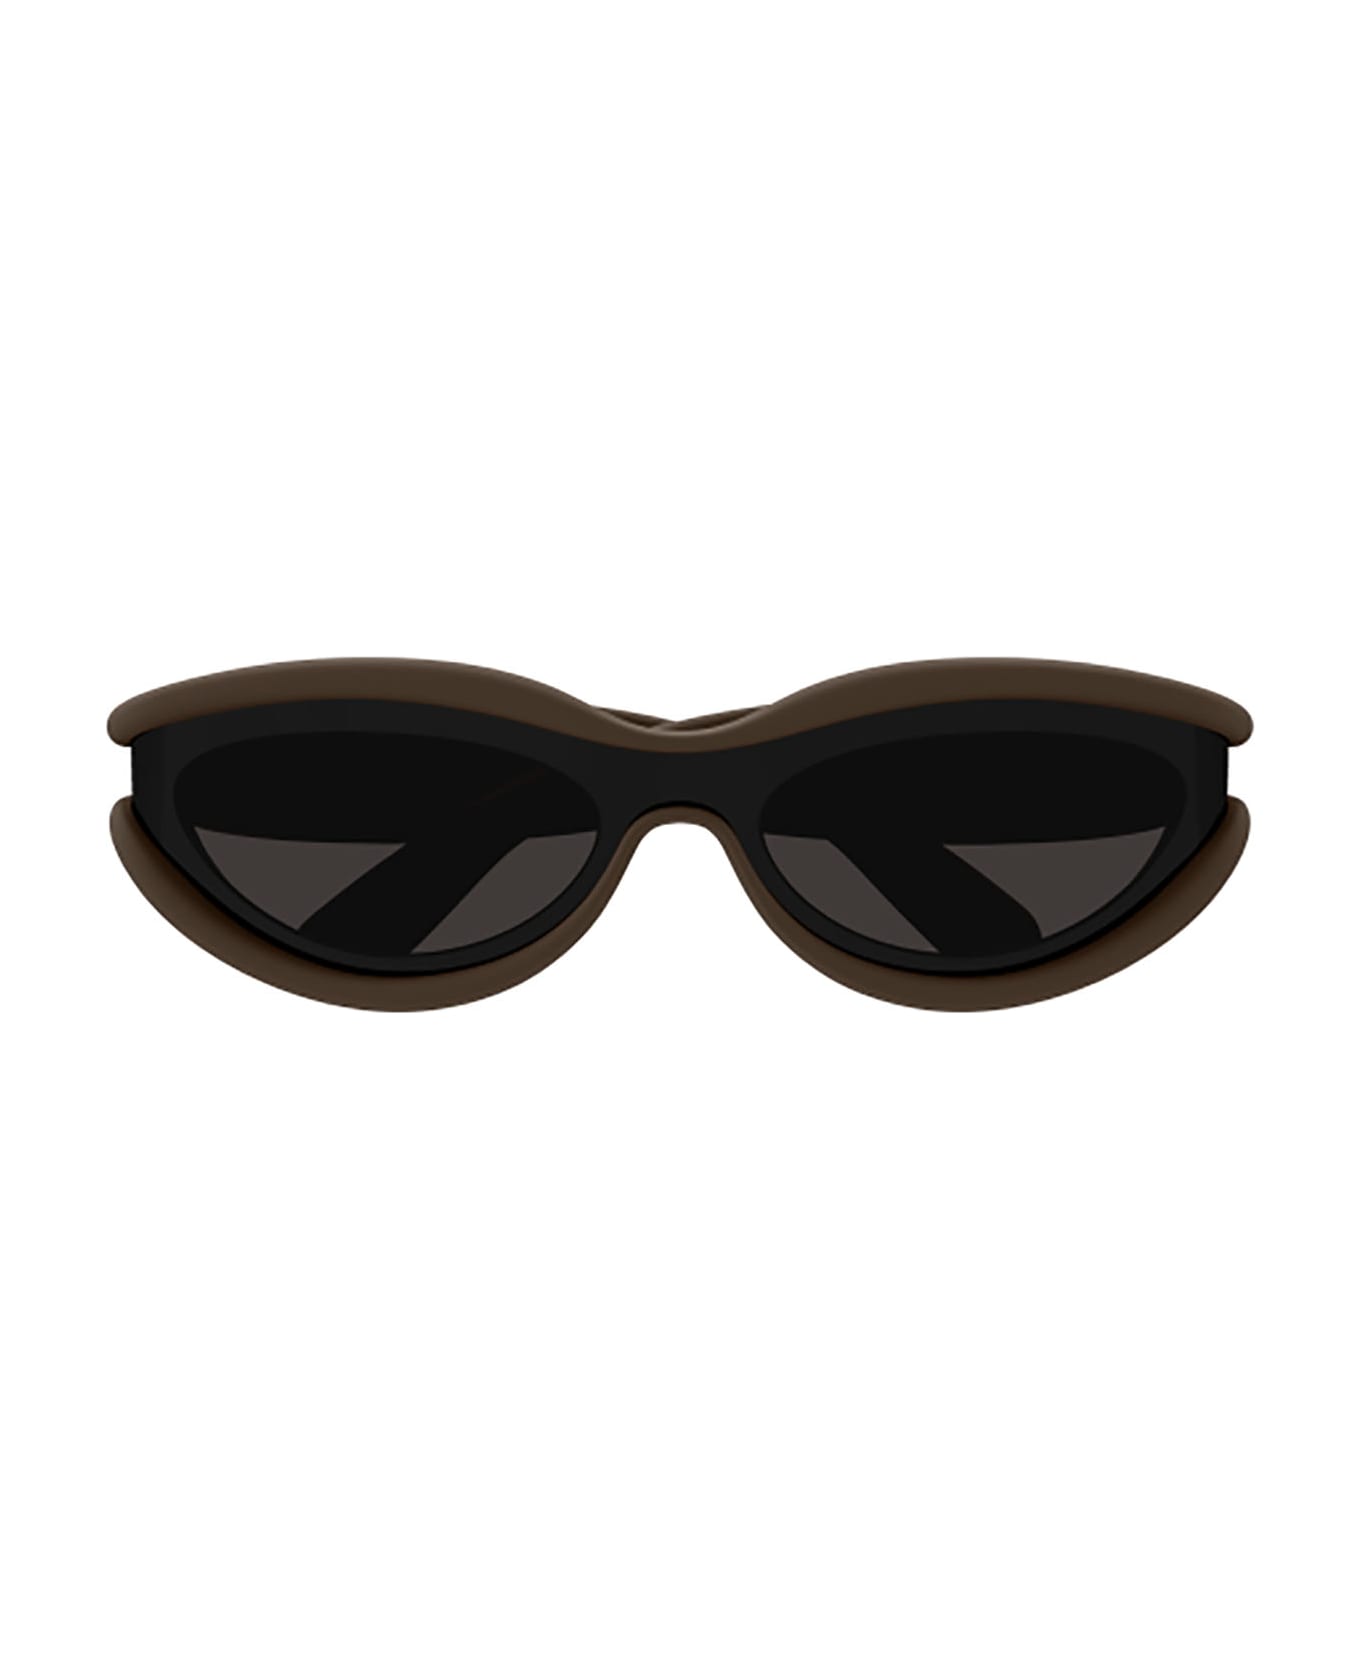 Bottega Veneta Eyewear 1g6m4ni0a - 002 Sunglasses SPLIT TIME OO4129 412914